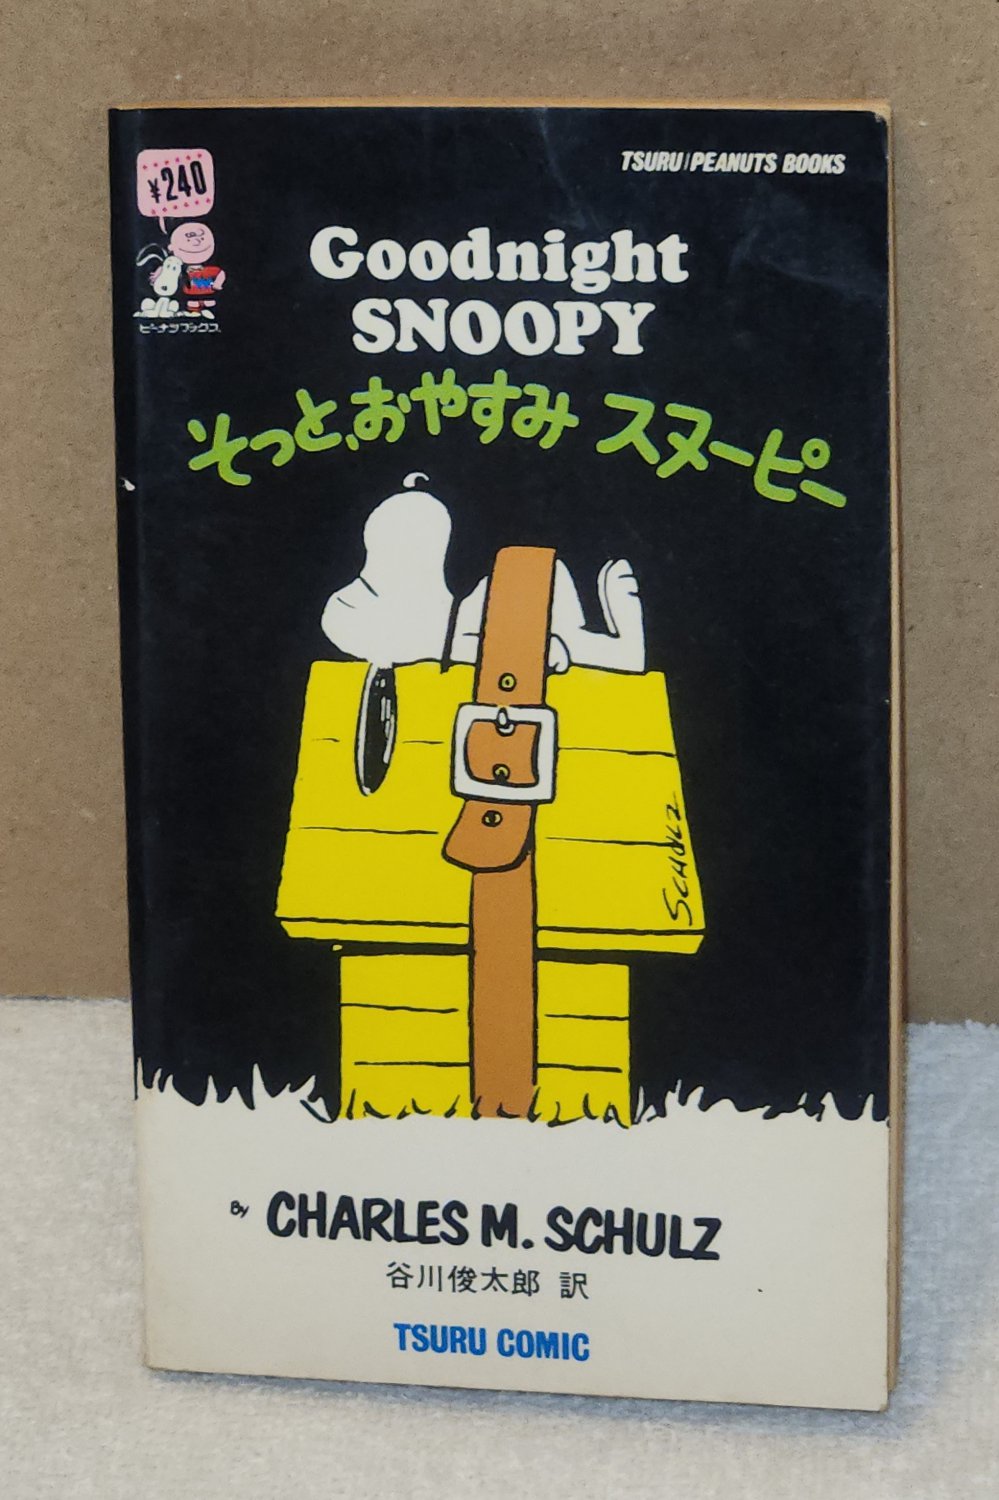 Tsuru Comic Book #30 Goodnight Snoopy English Japanese Softcover Paperback Peanuts Gang 1972